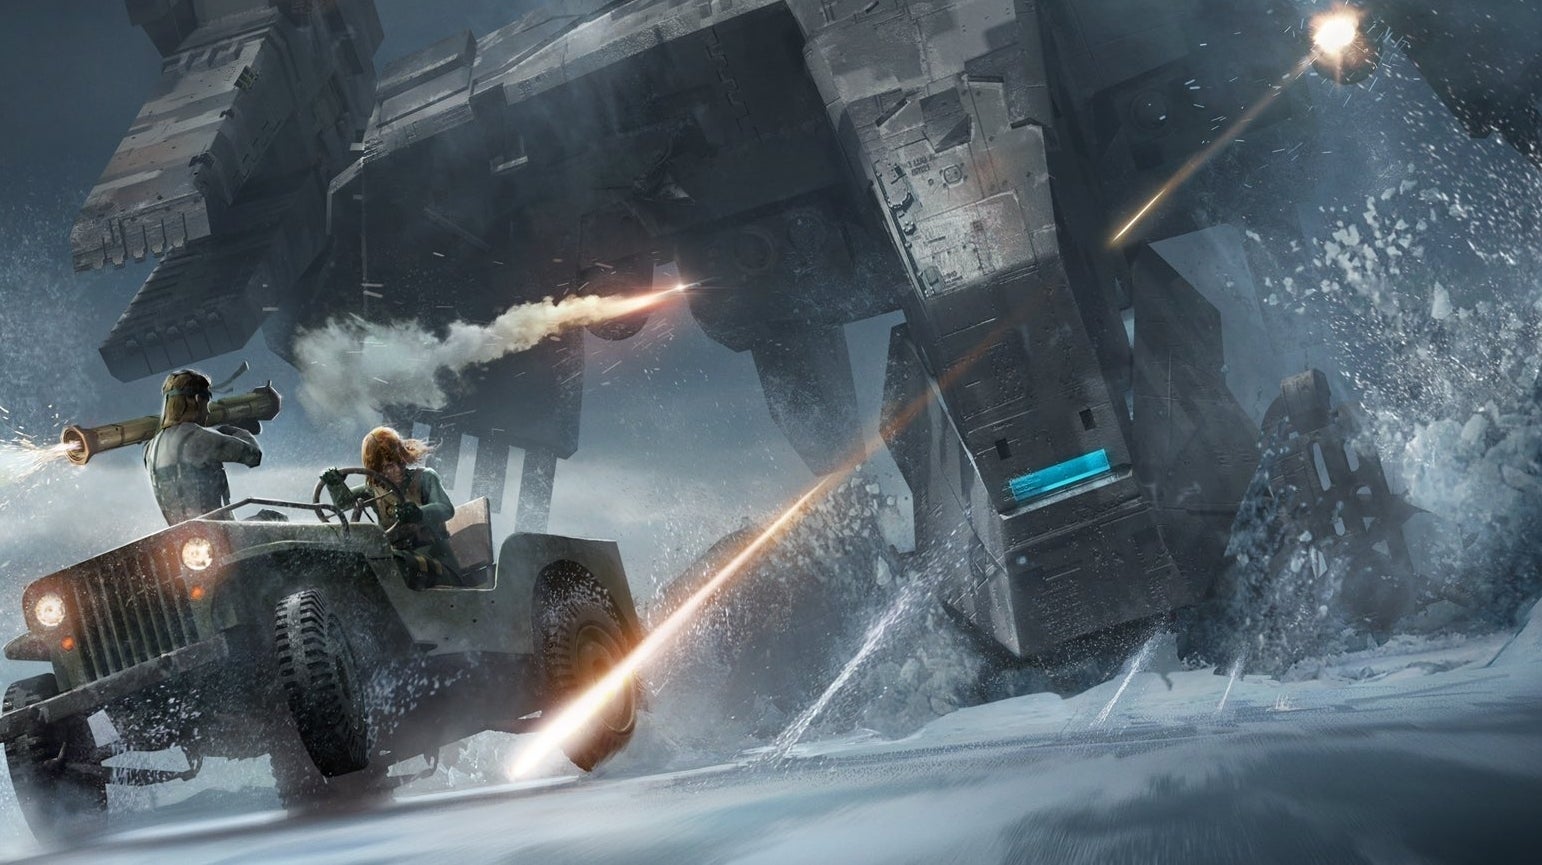 Immagine di Metal Gear Solid il film: nuova concept art svelata dal regista di Kong Skull Island